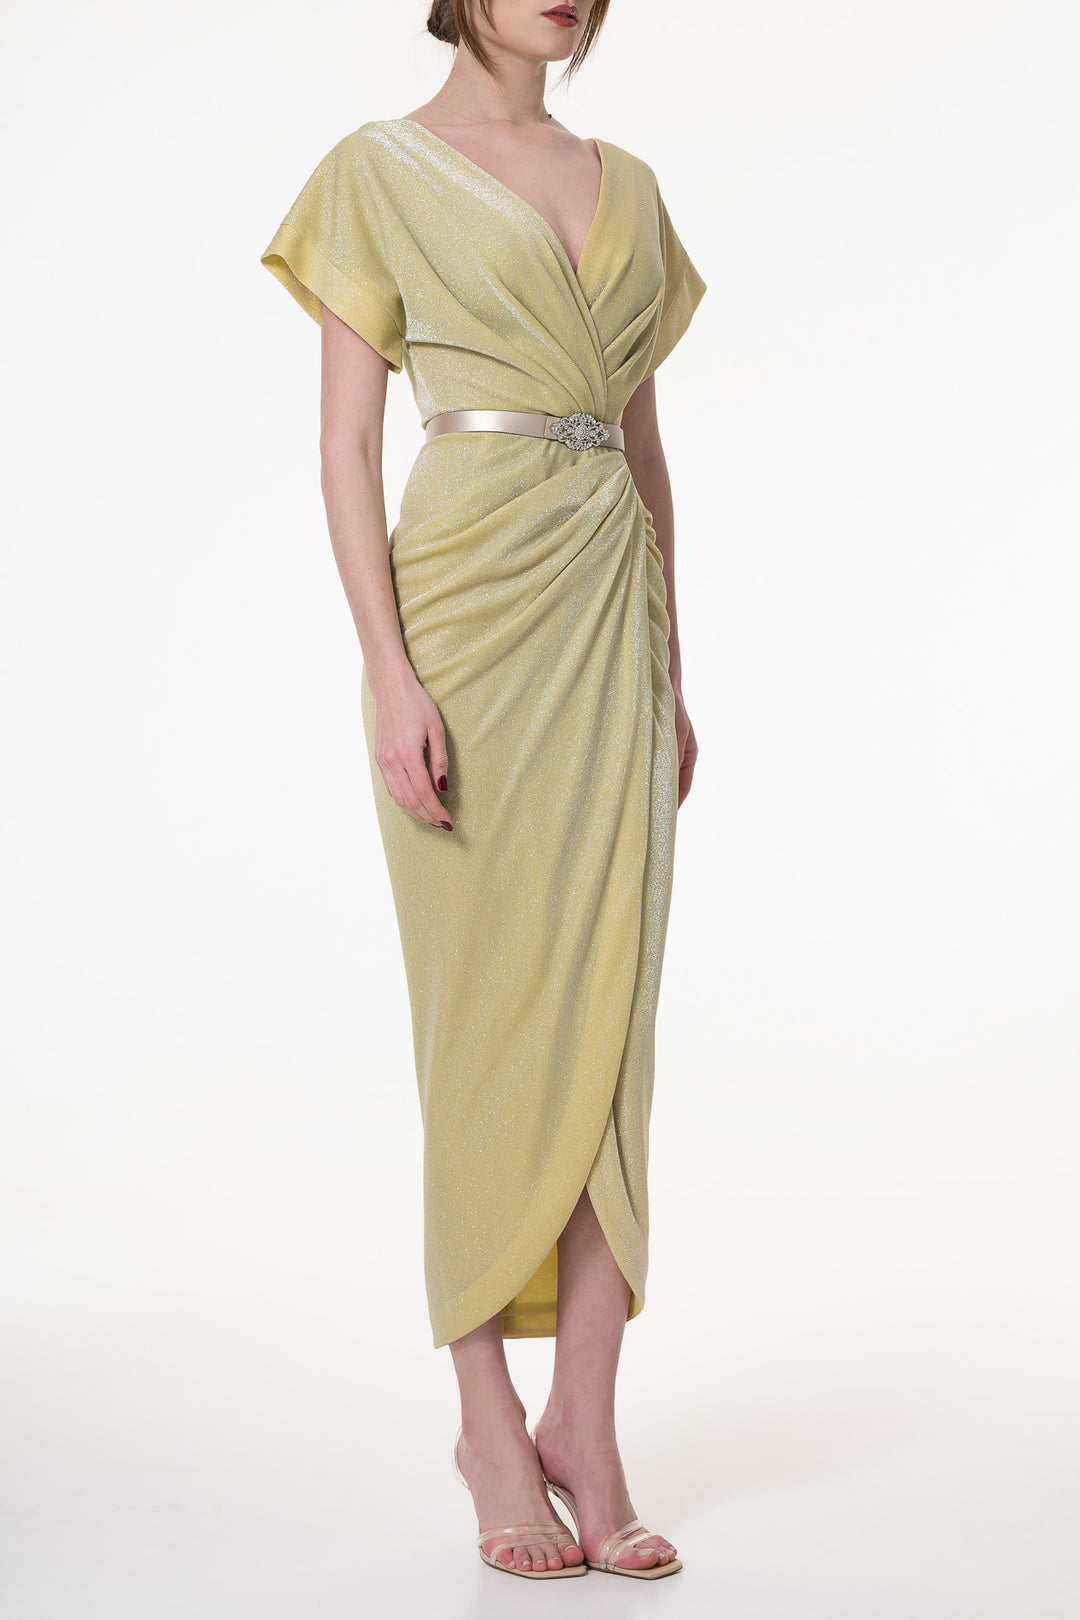 Daphne Lime Jersey Ankle Length Dress